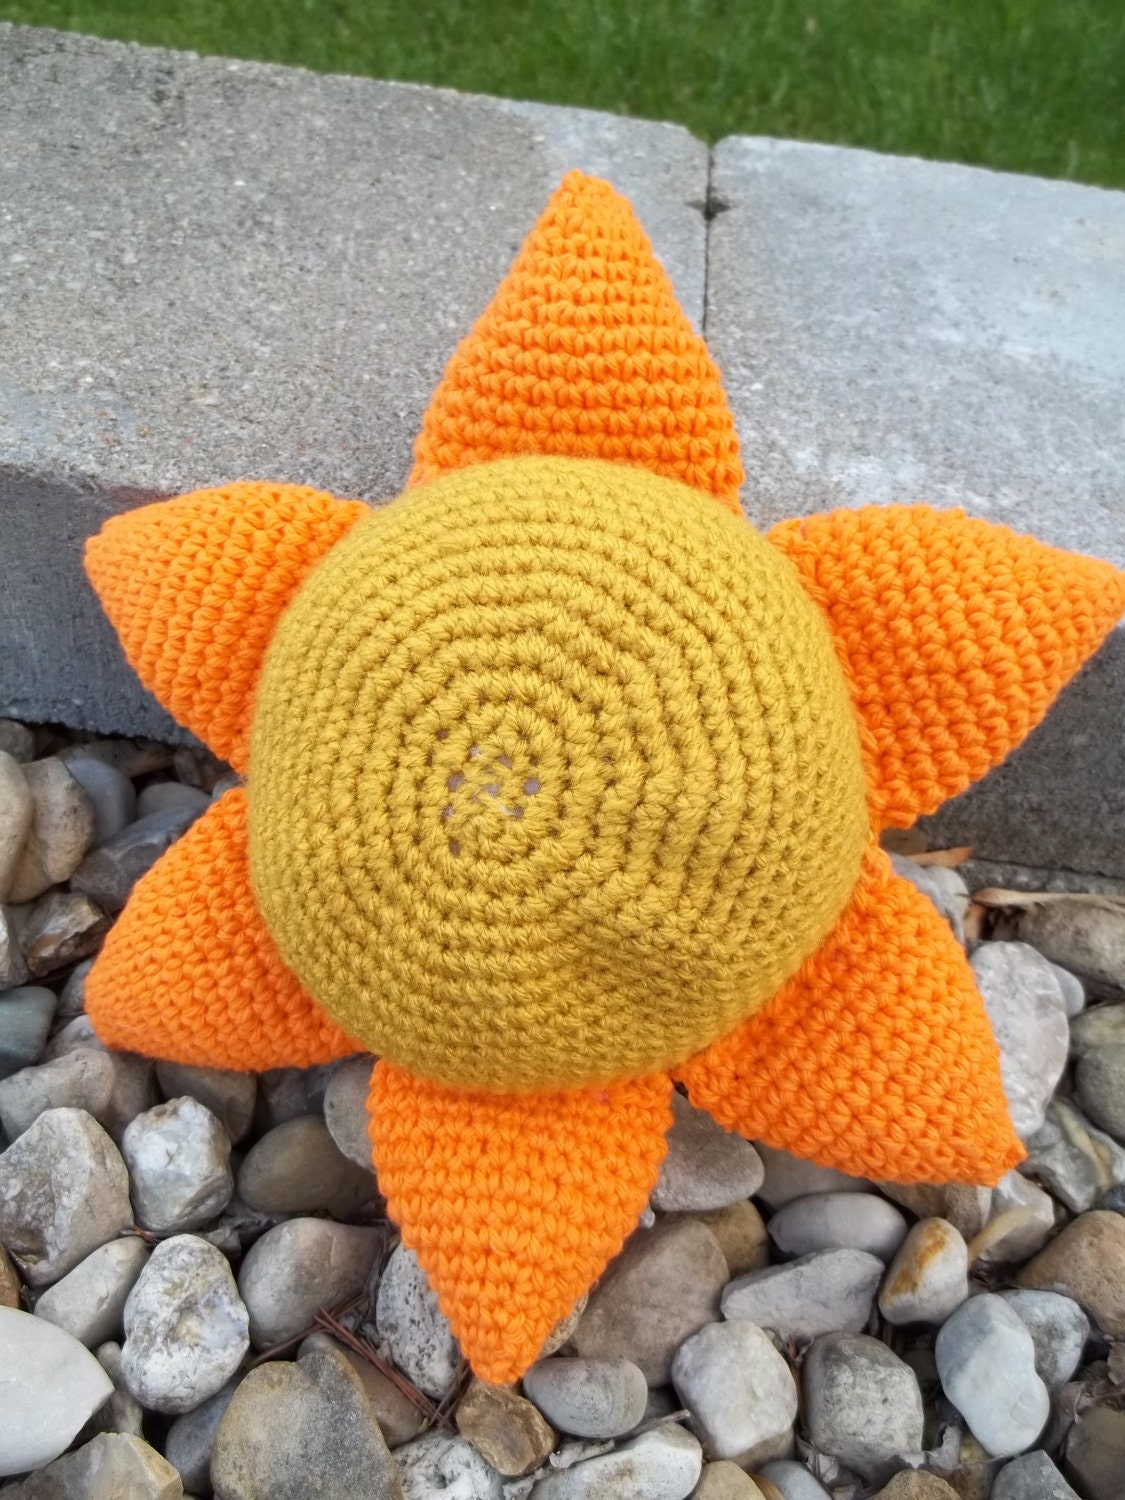 OOAK Crocheted Plush Sunshine - sunshineknitandsew